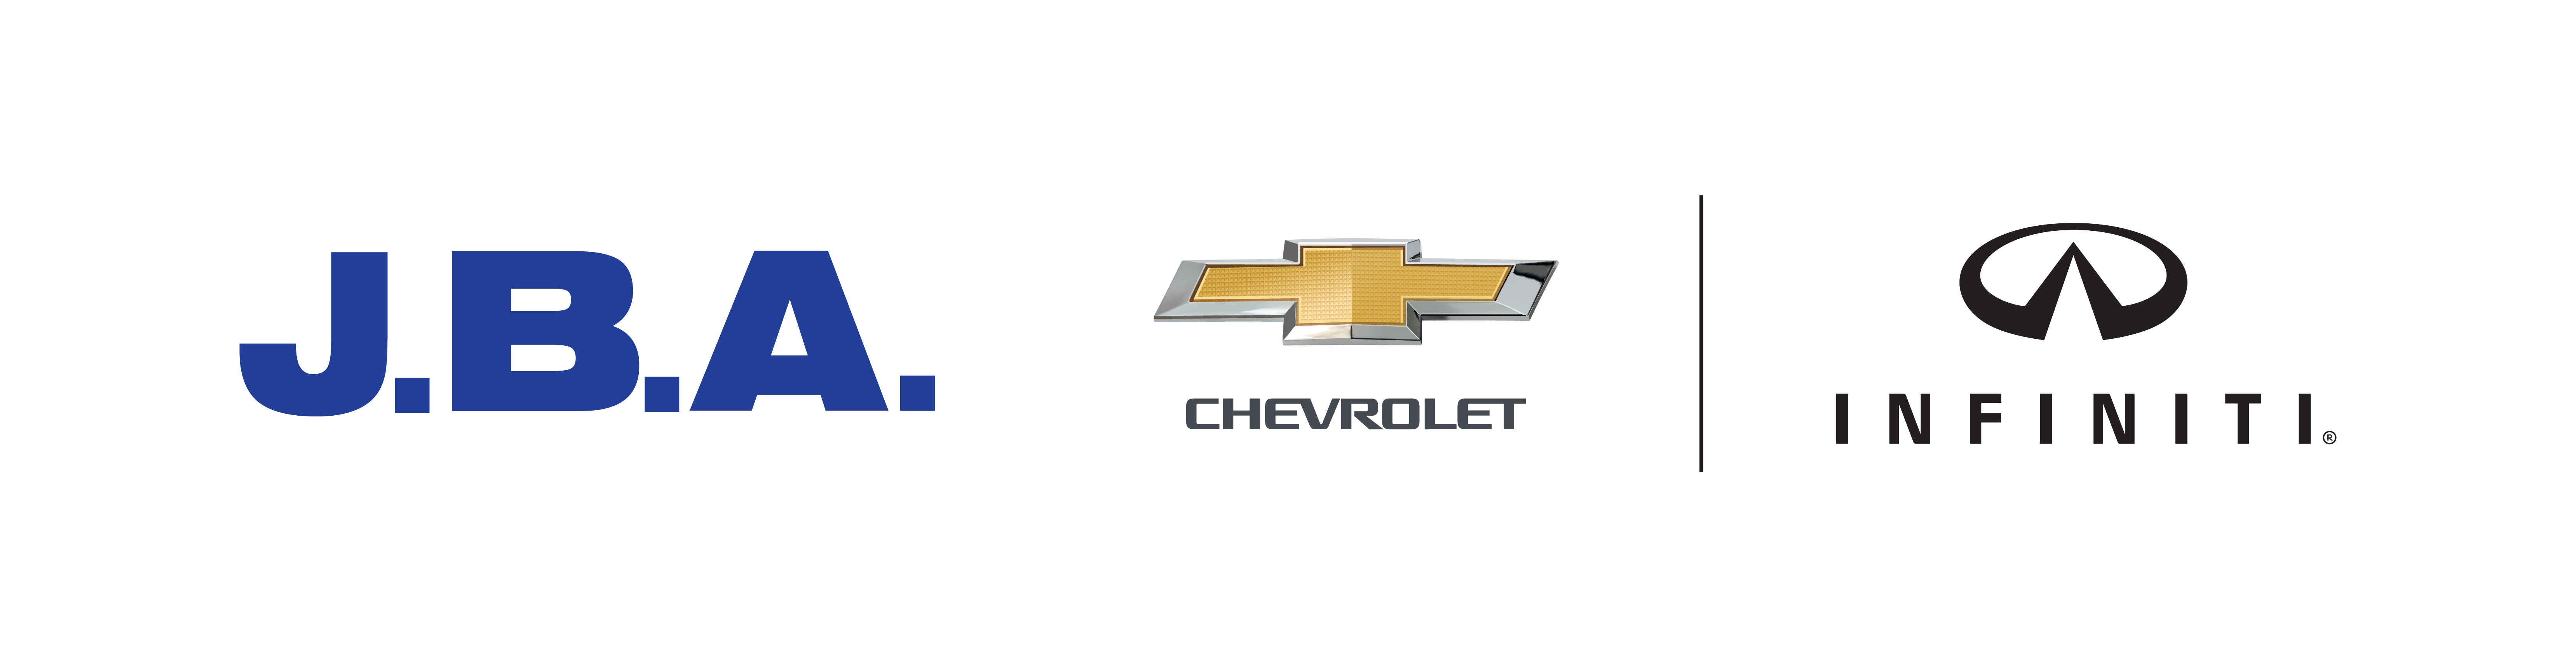 JBA_2019_Logo_Chevy_Infiniti-01.png